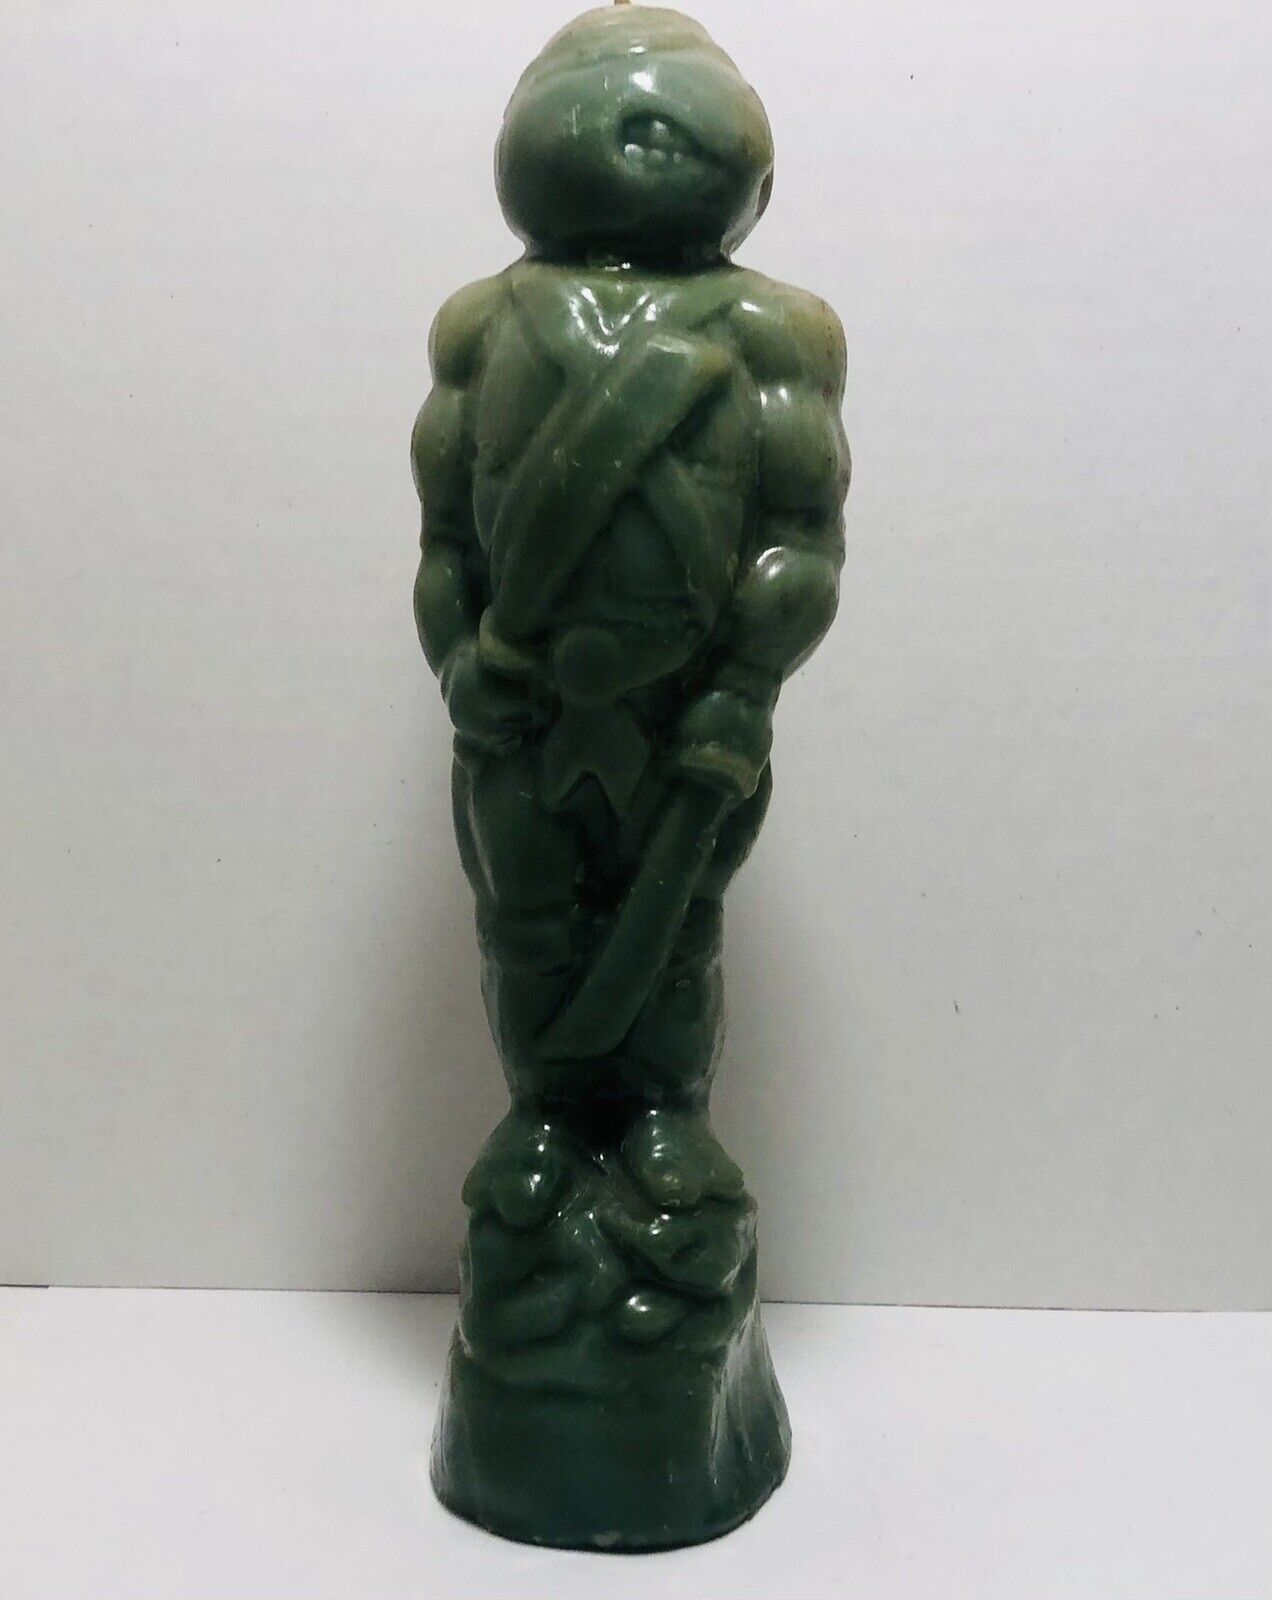 Rare Teenage mutant ninja turtle￼￼ Wax Candle Figurine 1980s 9 inches in height